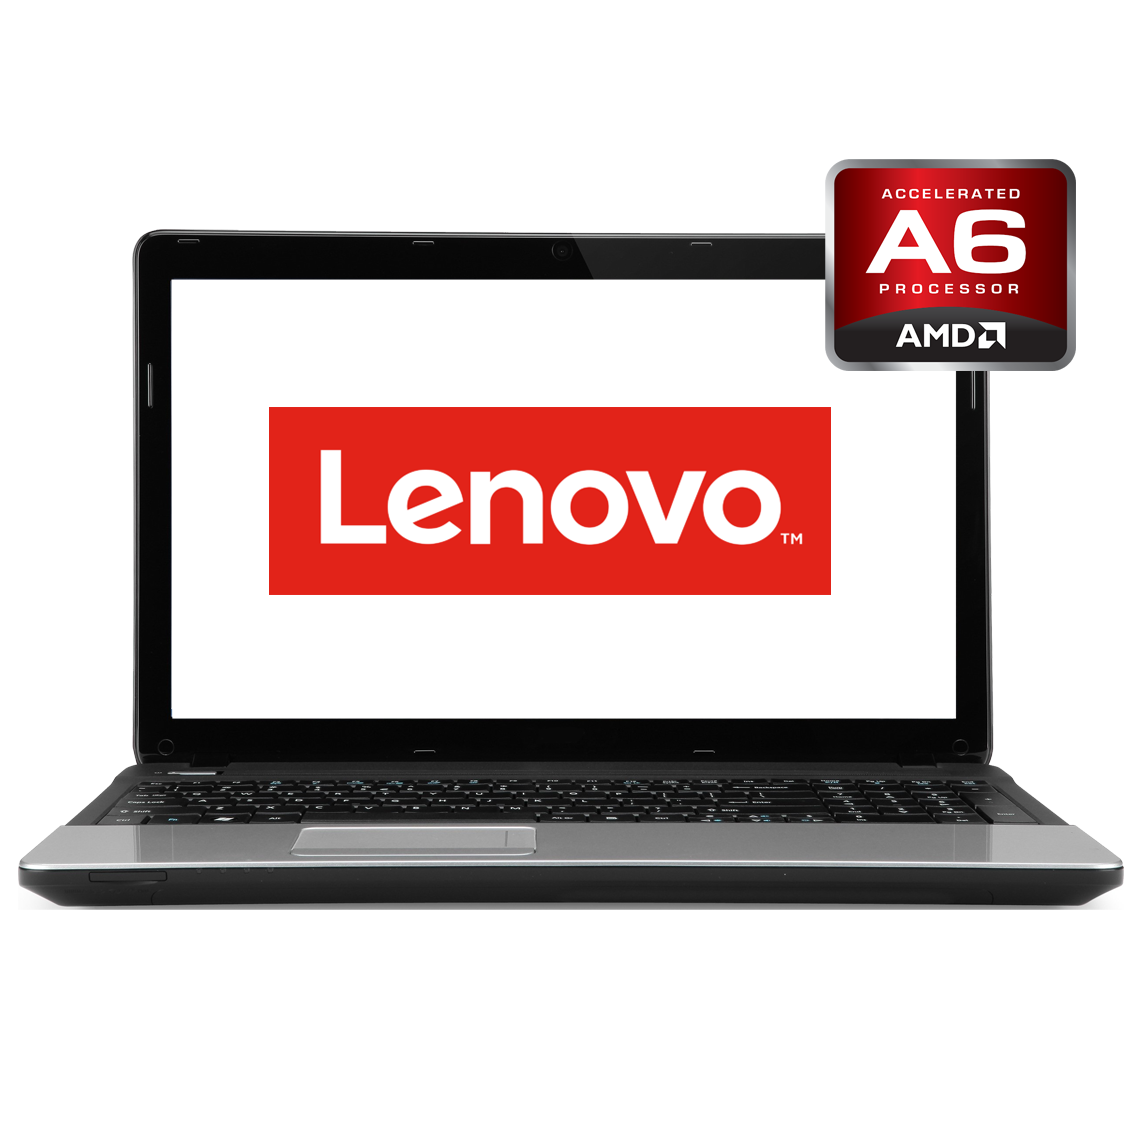 Lenovo - 14 inch AMD A6